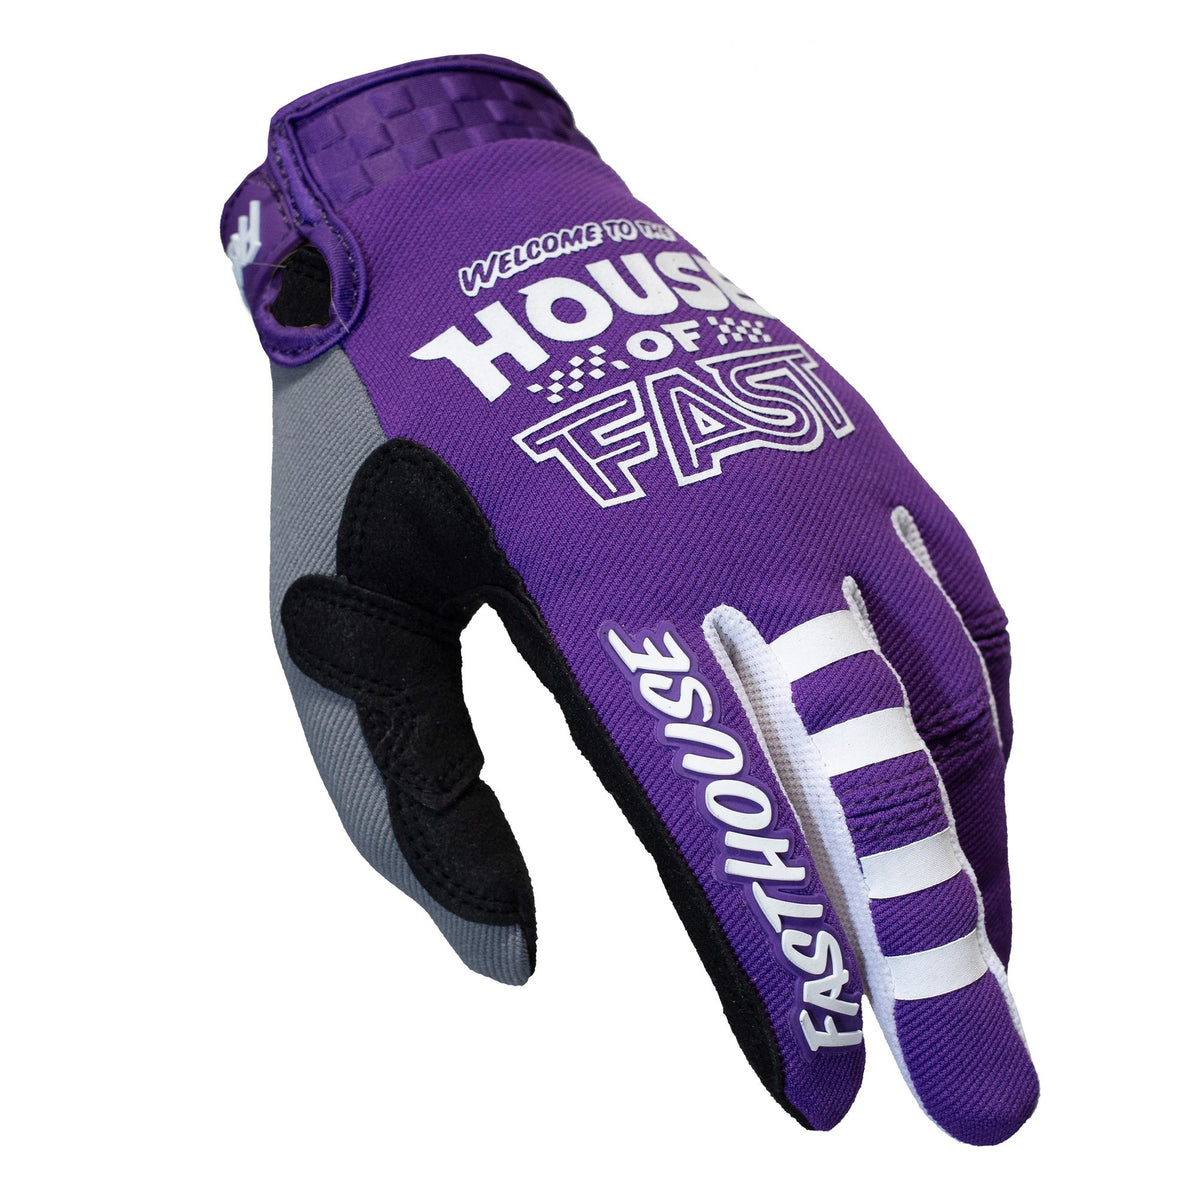 Howler Glove - Purple/Charcoal